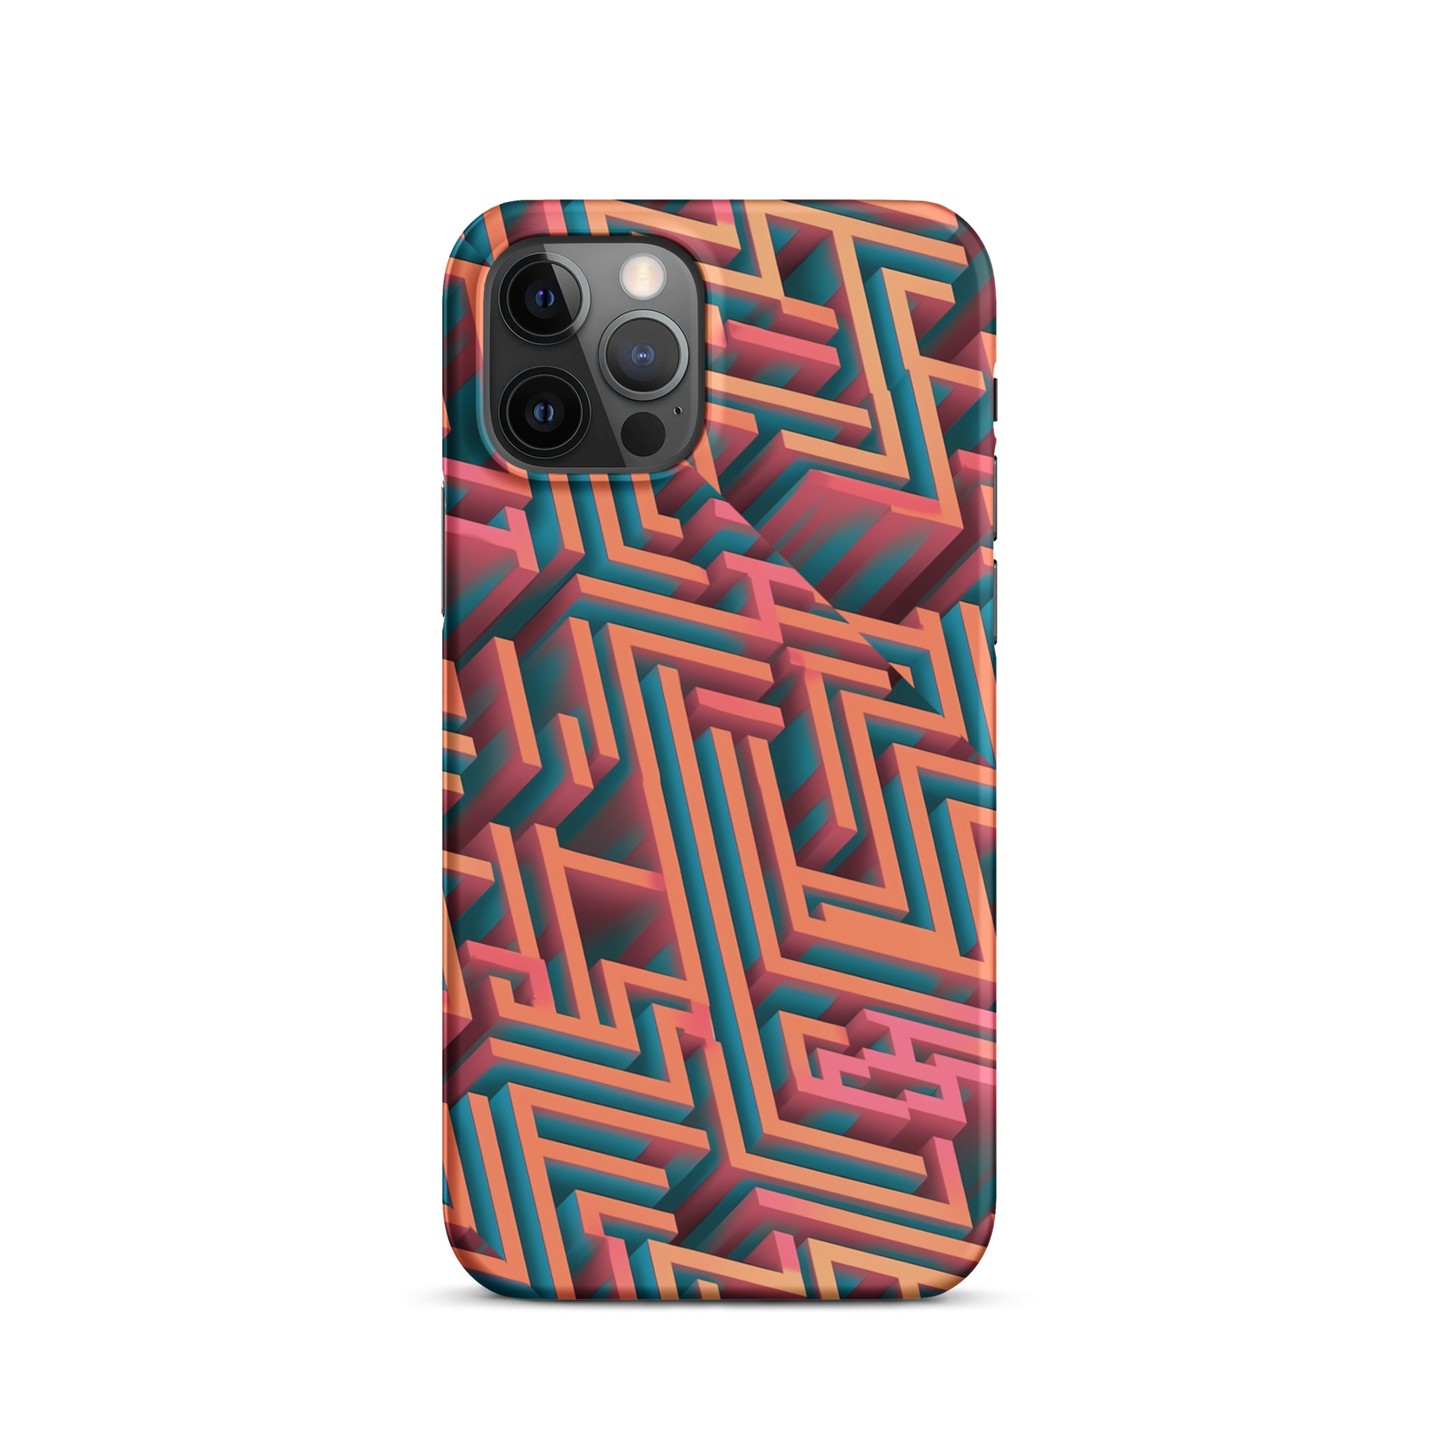 3D Maze Illusion | 3D Patterns | Snap Case for iPhone - #1